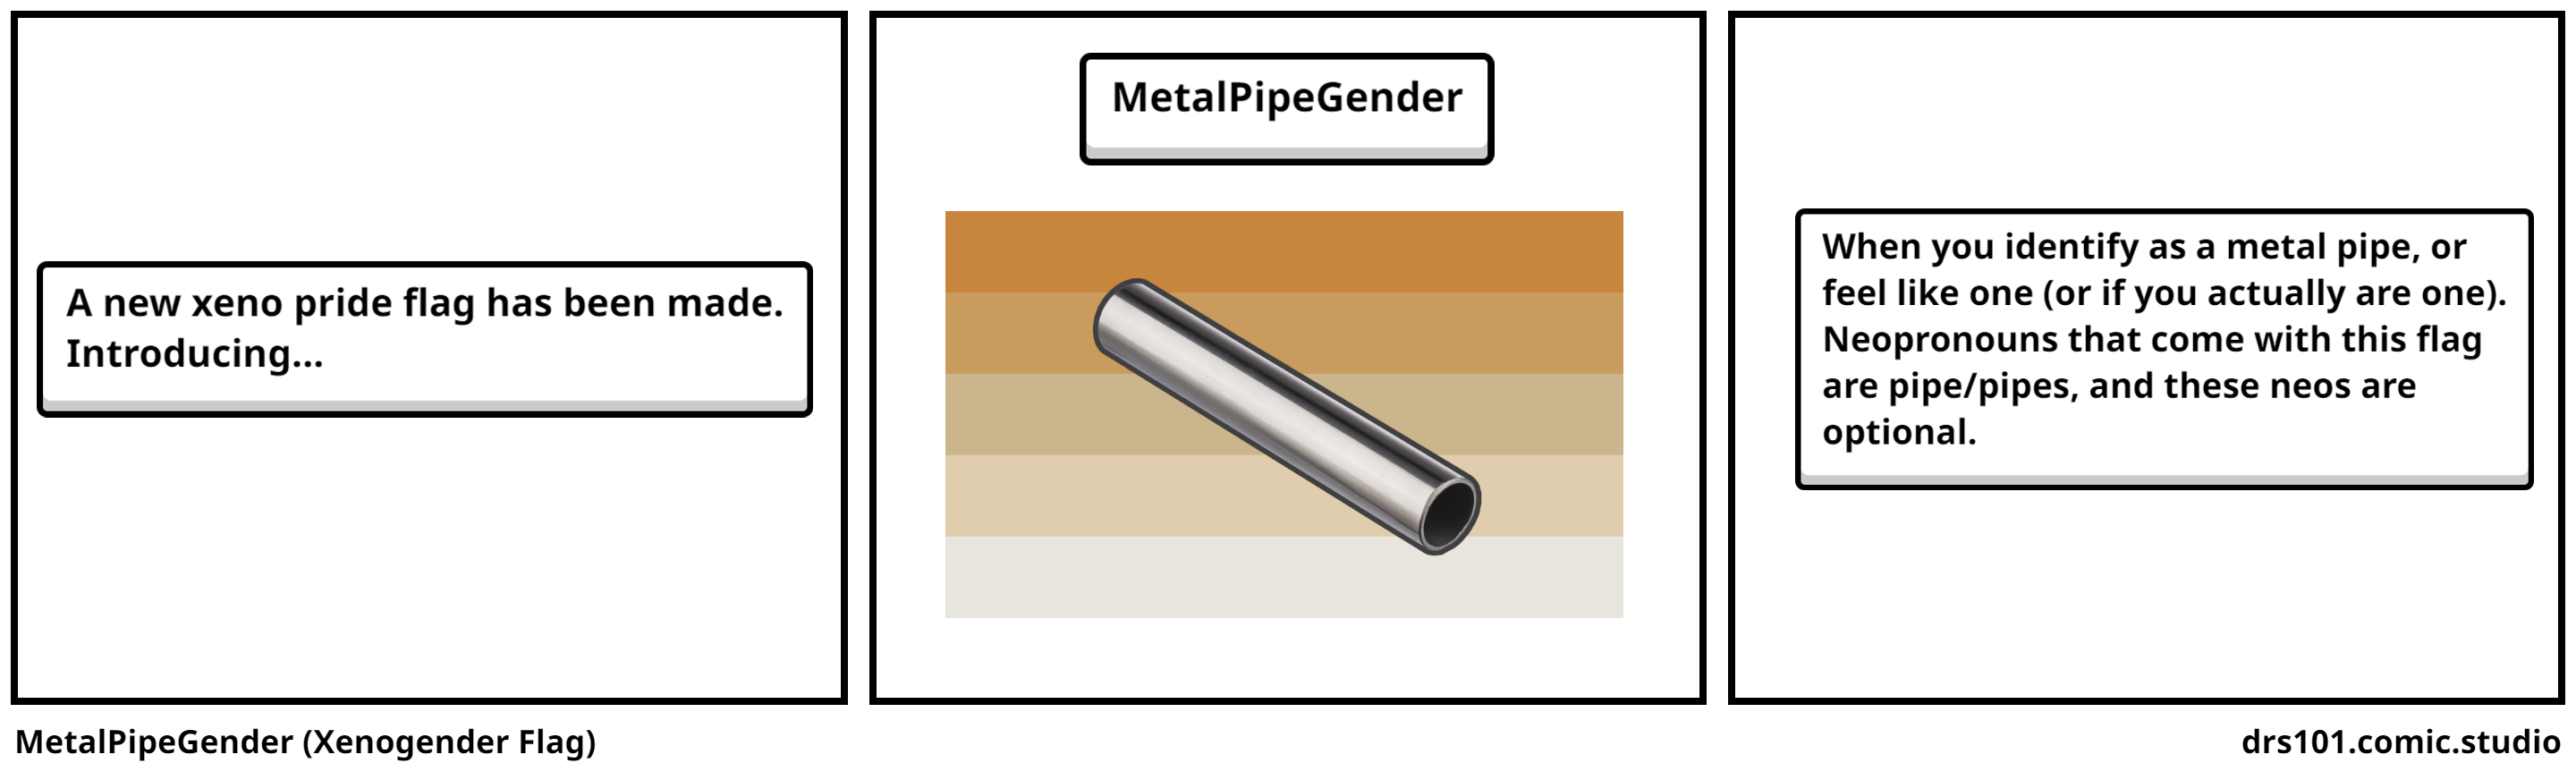 MetalPipeGender (Xenogender Flag)